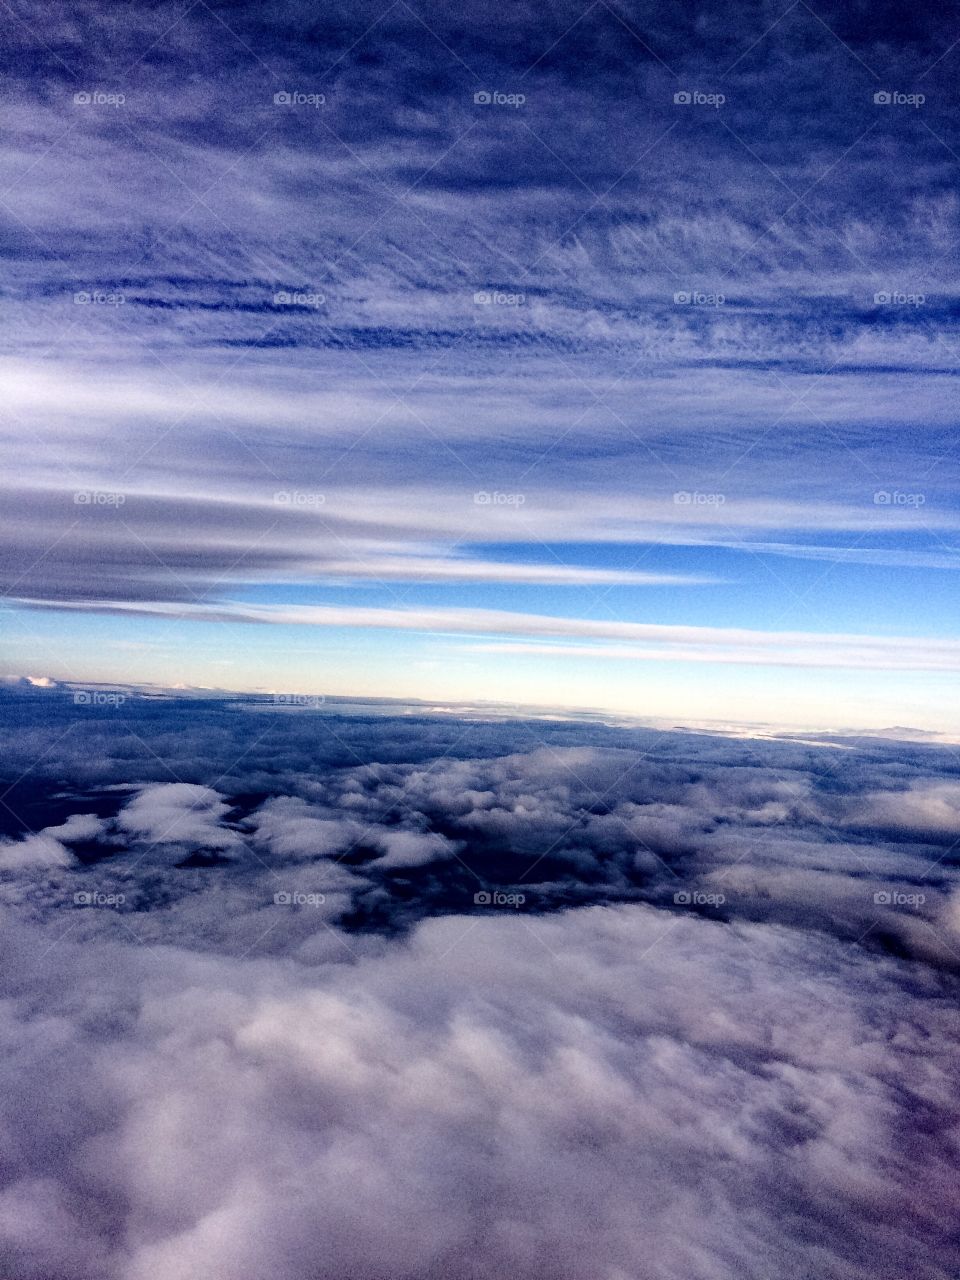 Plane View . October 2015